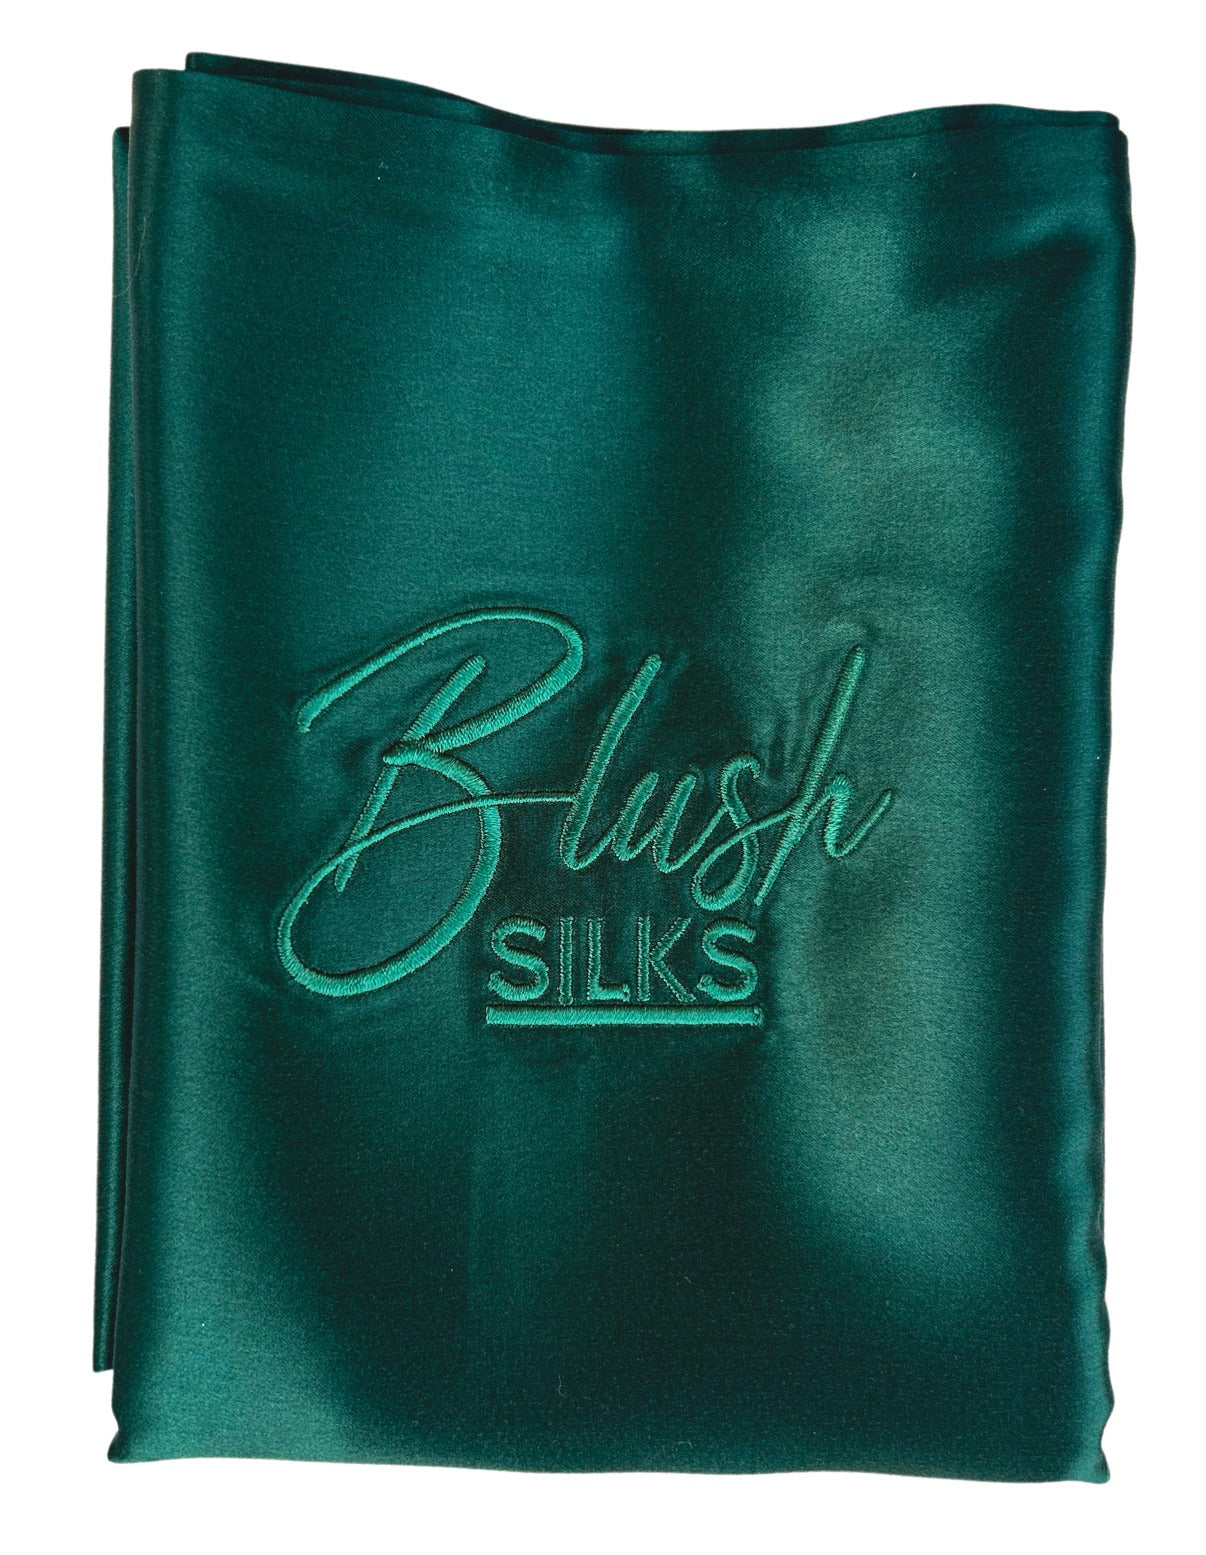 NEW Blush Silks 100% Pure Mulberry Silk Pillowcase - Emerald